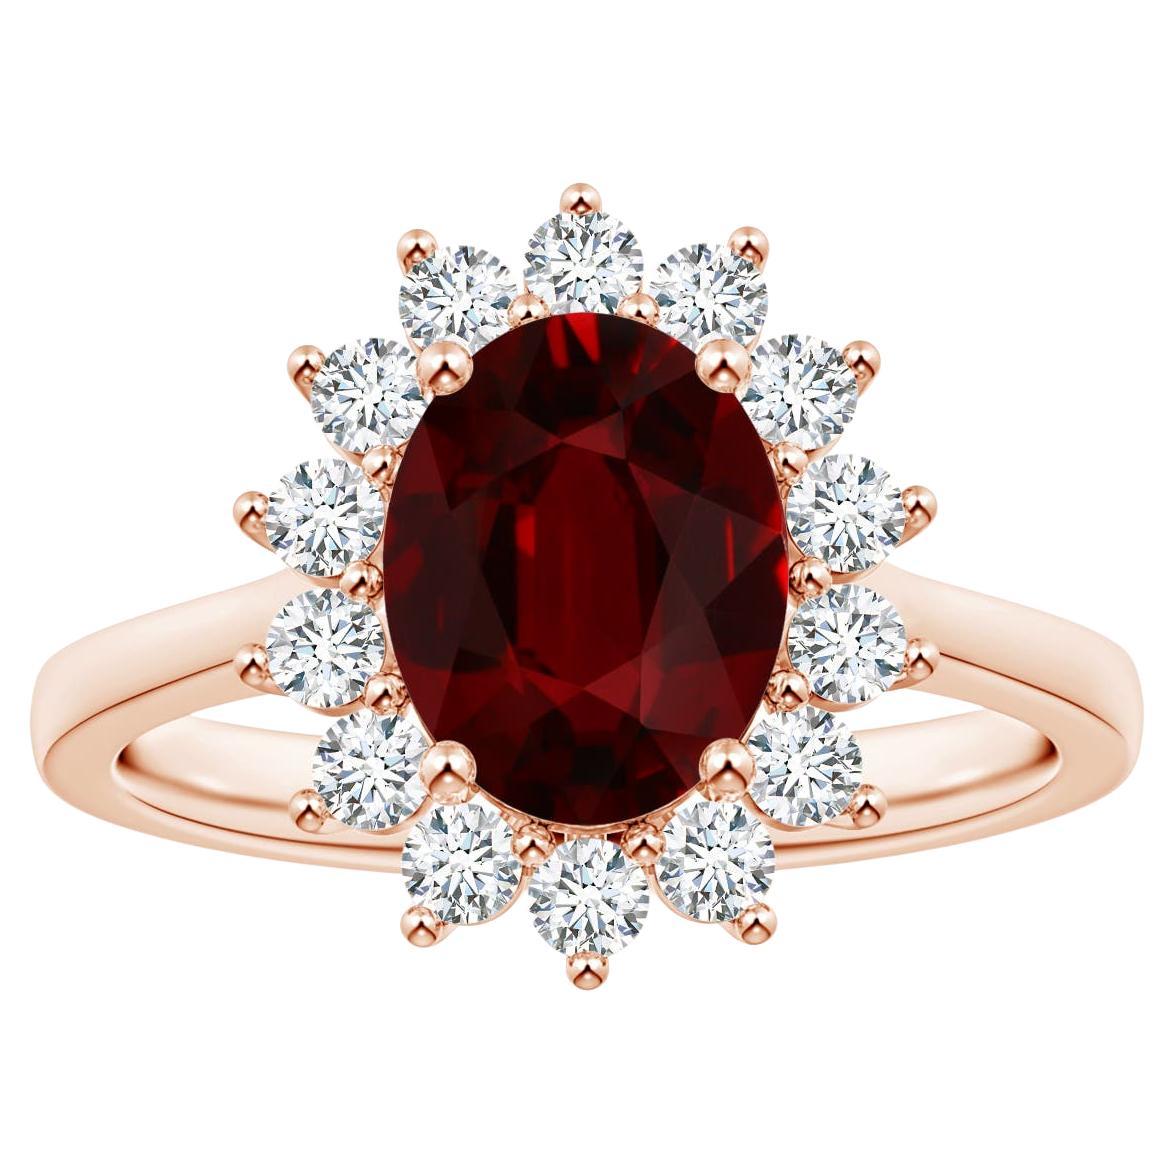 ANGARA Princess Diana Inspired GIA Certified Ruby Halo Ring in Rose Gold